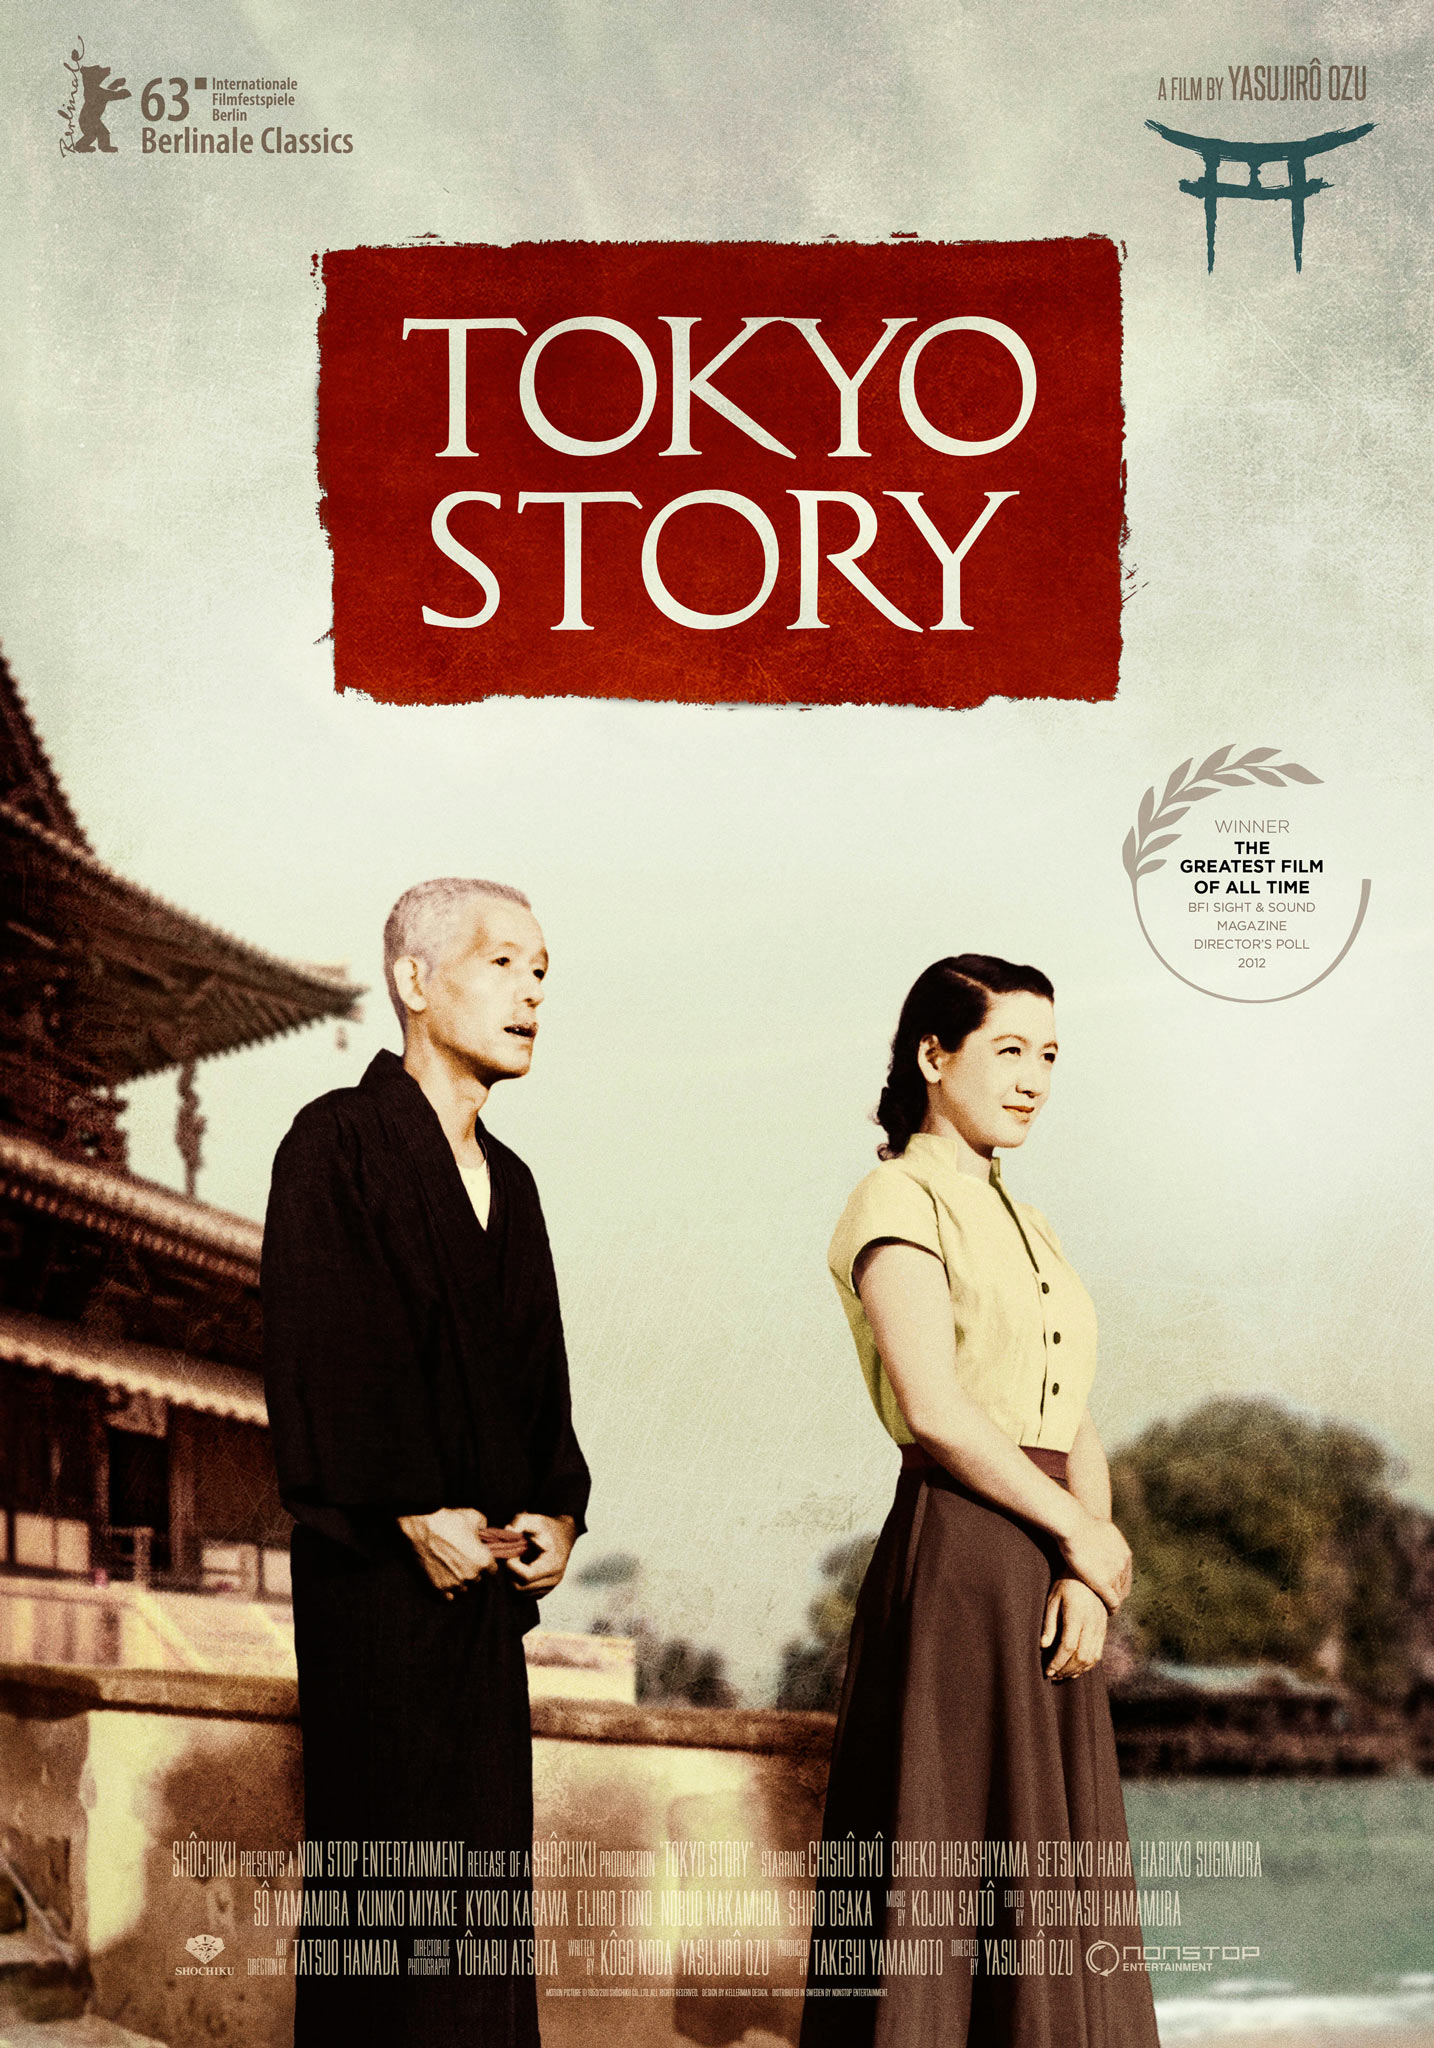 Tokyo Story (1953) theatrical onesheet